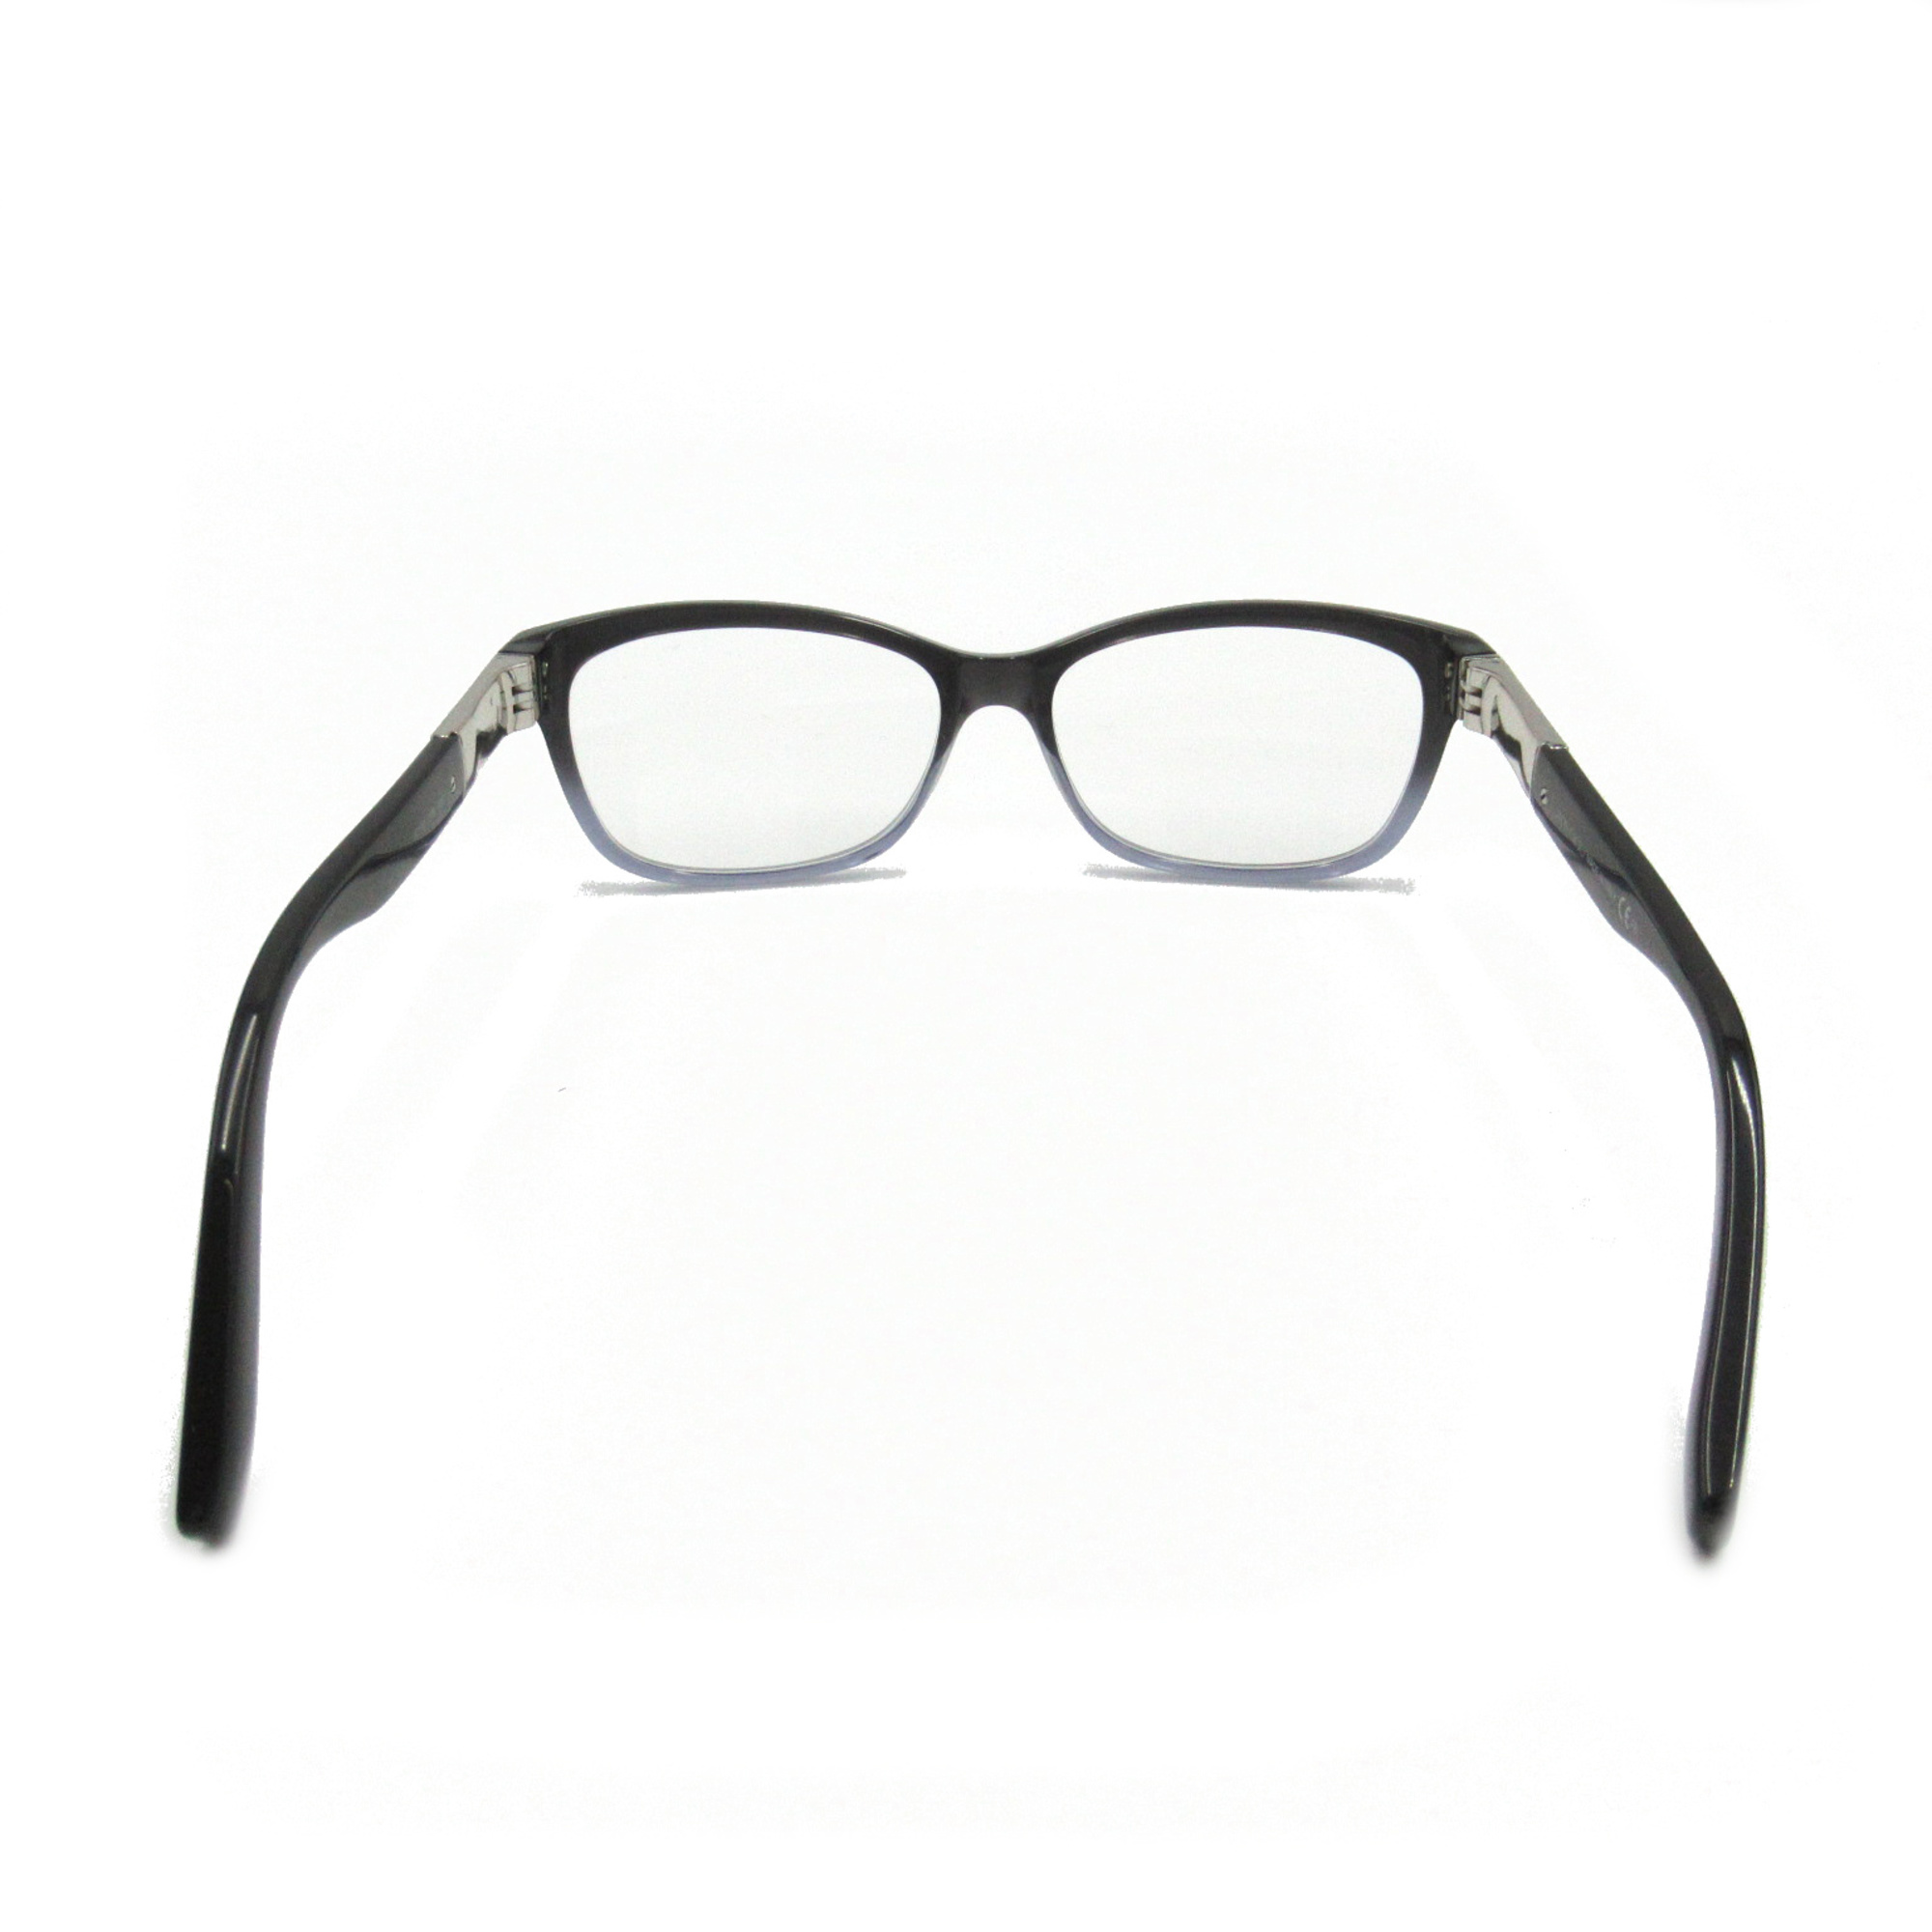 JIMMY CHOO Date Glasses Glasses Frame Black Blue Plastic 110 U76(53)